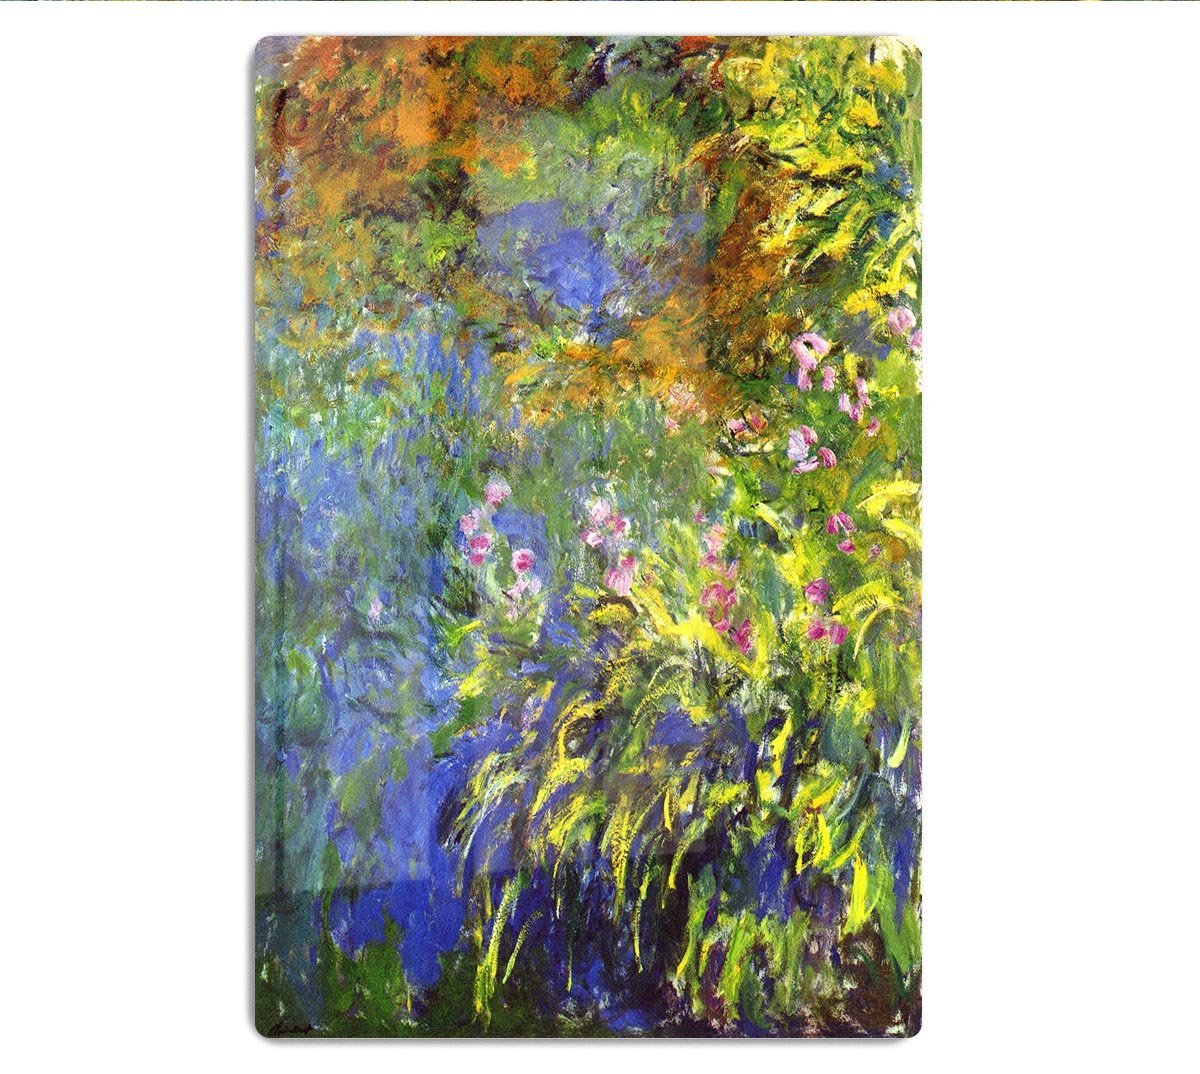 Iris at the sea rose pond 2 by Monet HD Metal Print